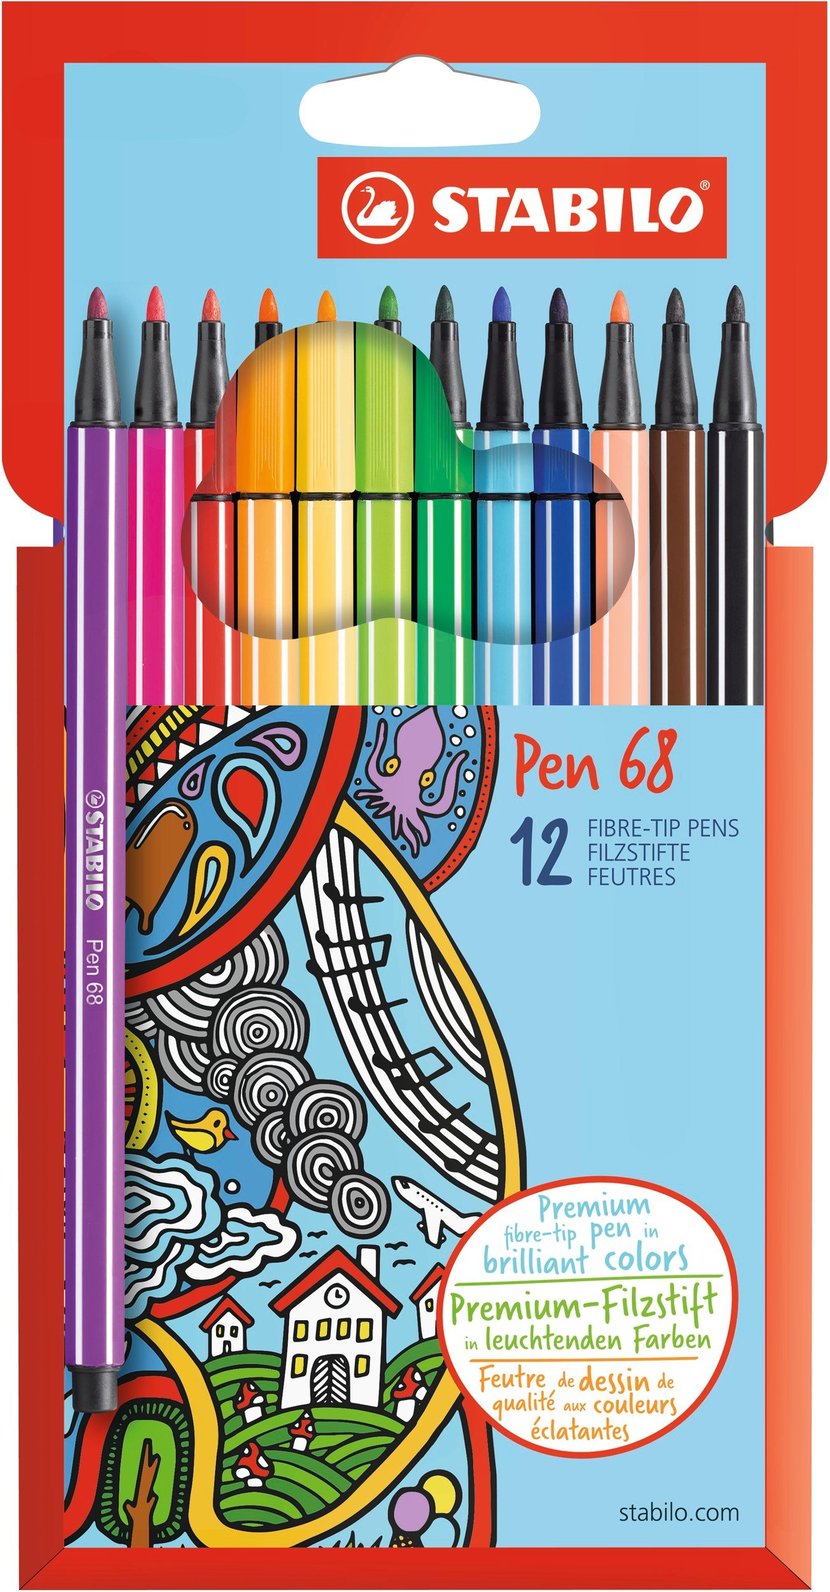 STABILO - Feutres de coloriage Pen68 Arty, 12 pi…